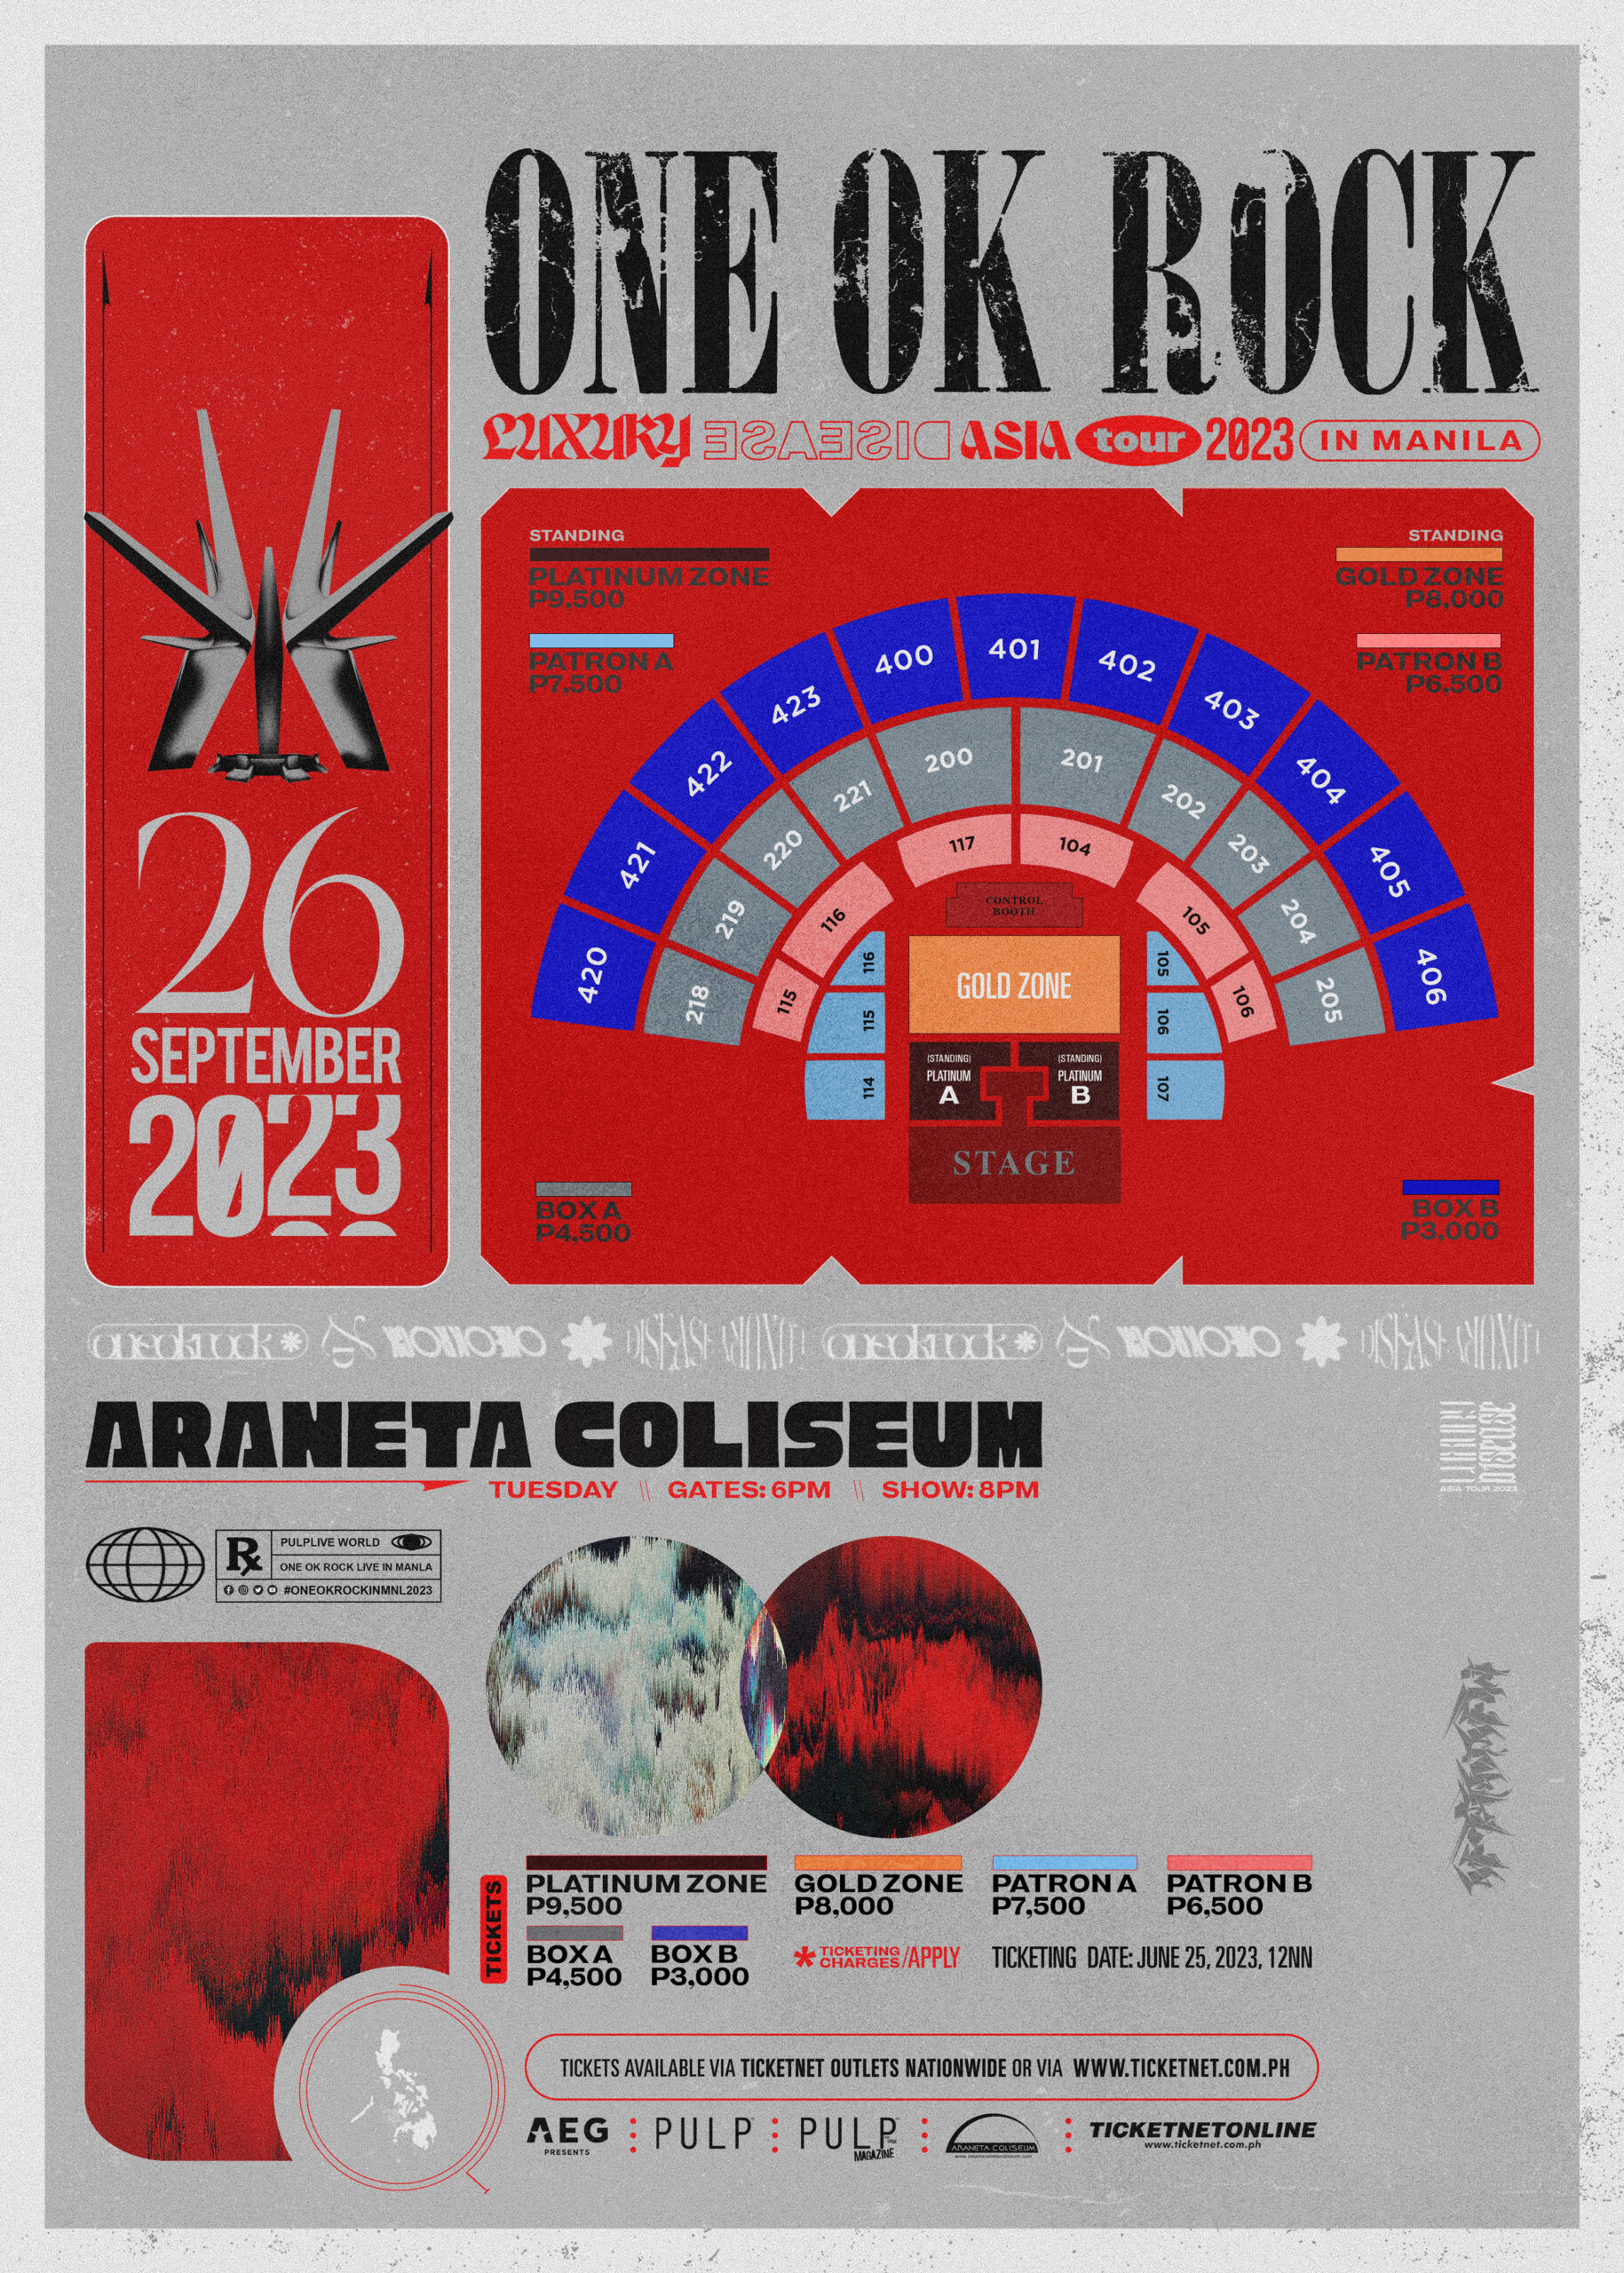 ONE OK ROCK ANNOUNCE LUXURY DISEASE ASIA TOUR 2023 PULP.PH